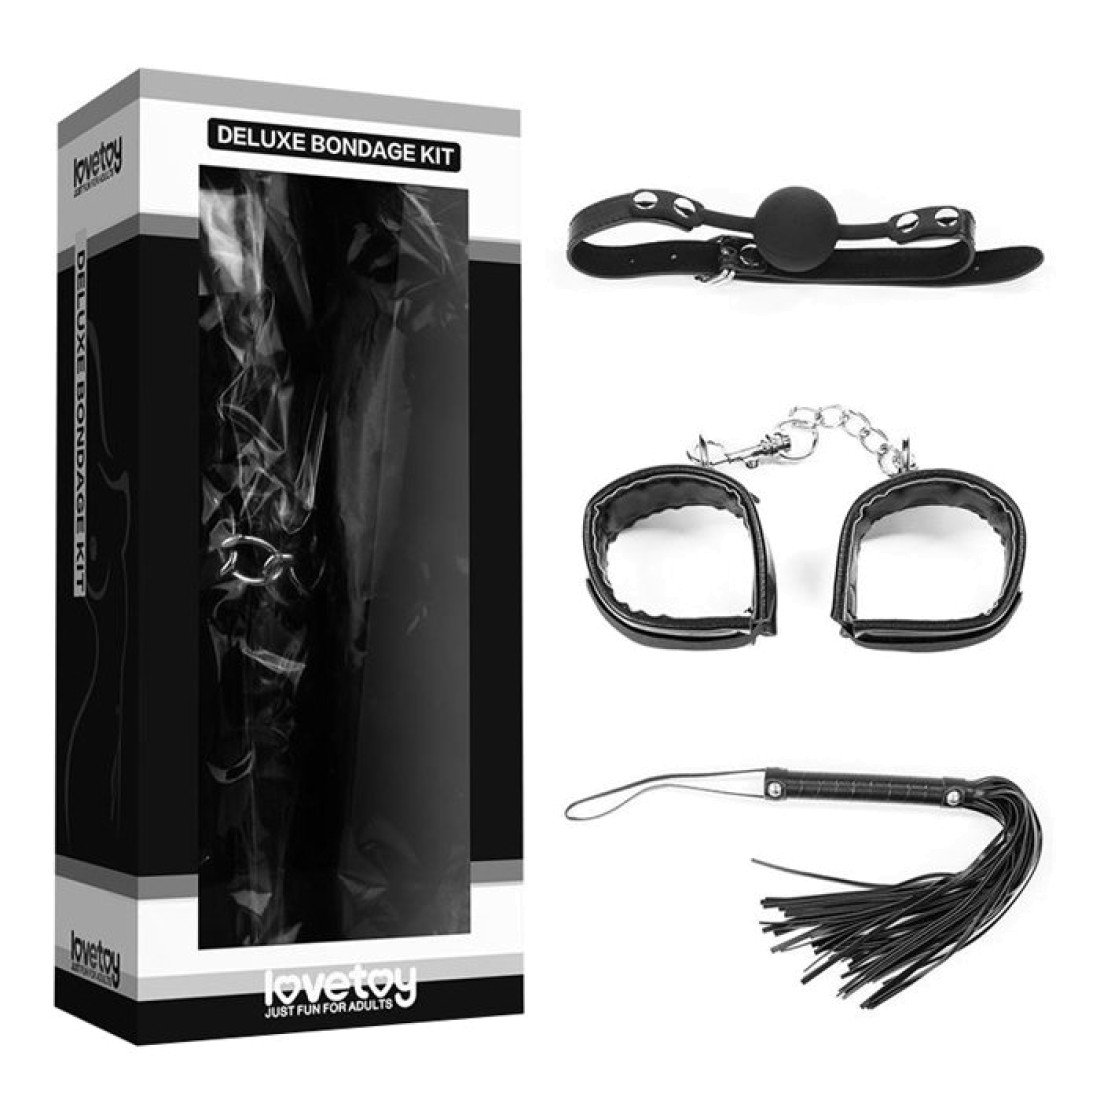 BDSM rinkinys „Deluxe Bondage Kit“ - Love Toy